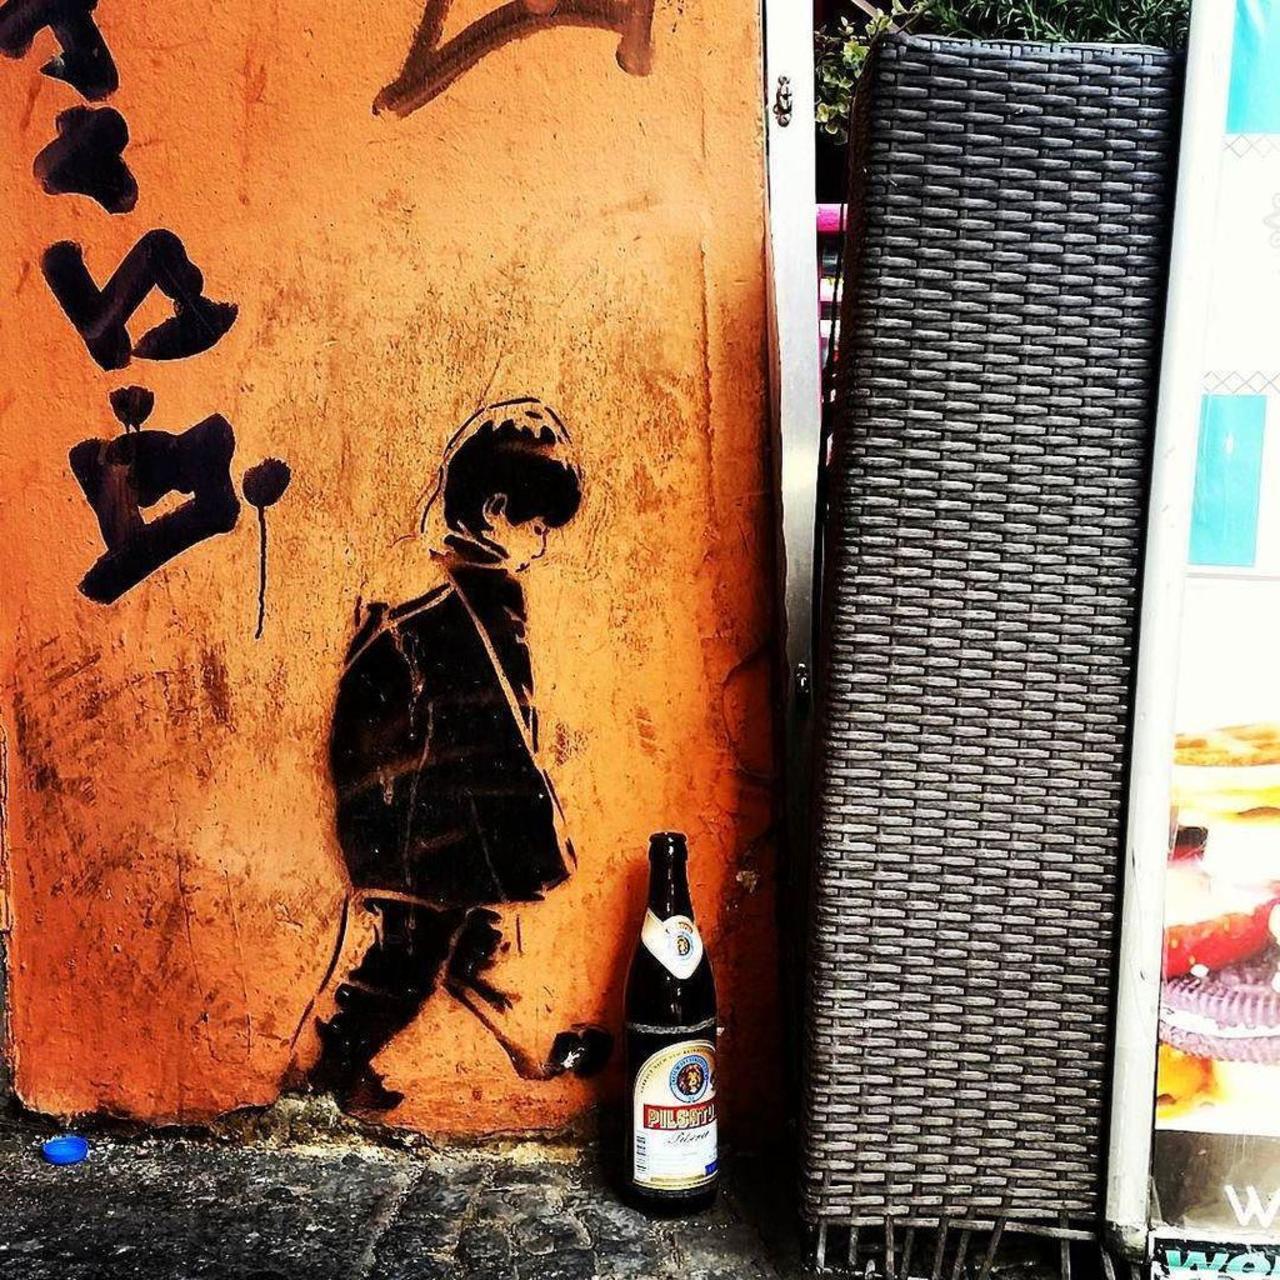 RT @StArtEverywhere: Art by @icyandsot
#Graffiti #instadaily #instaphoto #streetart #streetartberlin #Berlin #Germany #streetartphotogra… http://t.co/1WQJYJNqwL